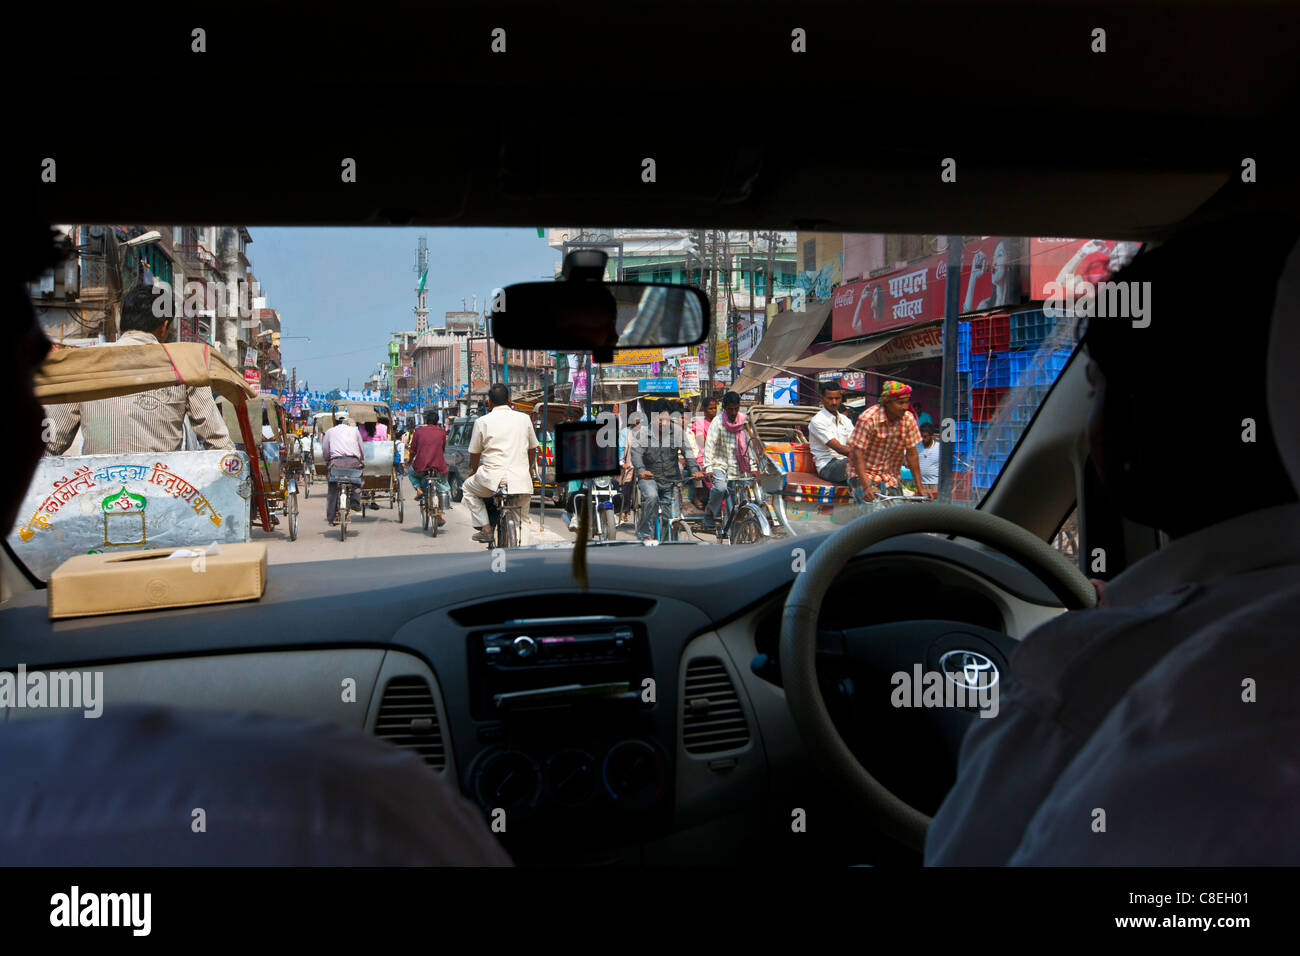 Busy street scene viewed through taxi windscreen in city of Varanasi, Benares, Northern India Stock Photo